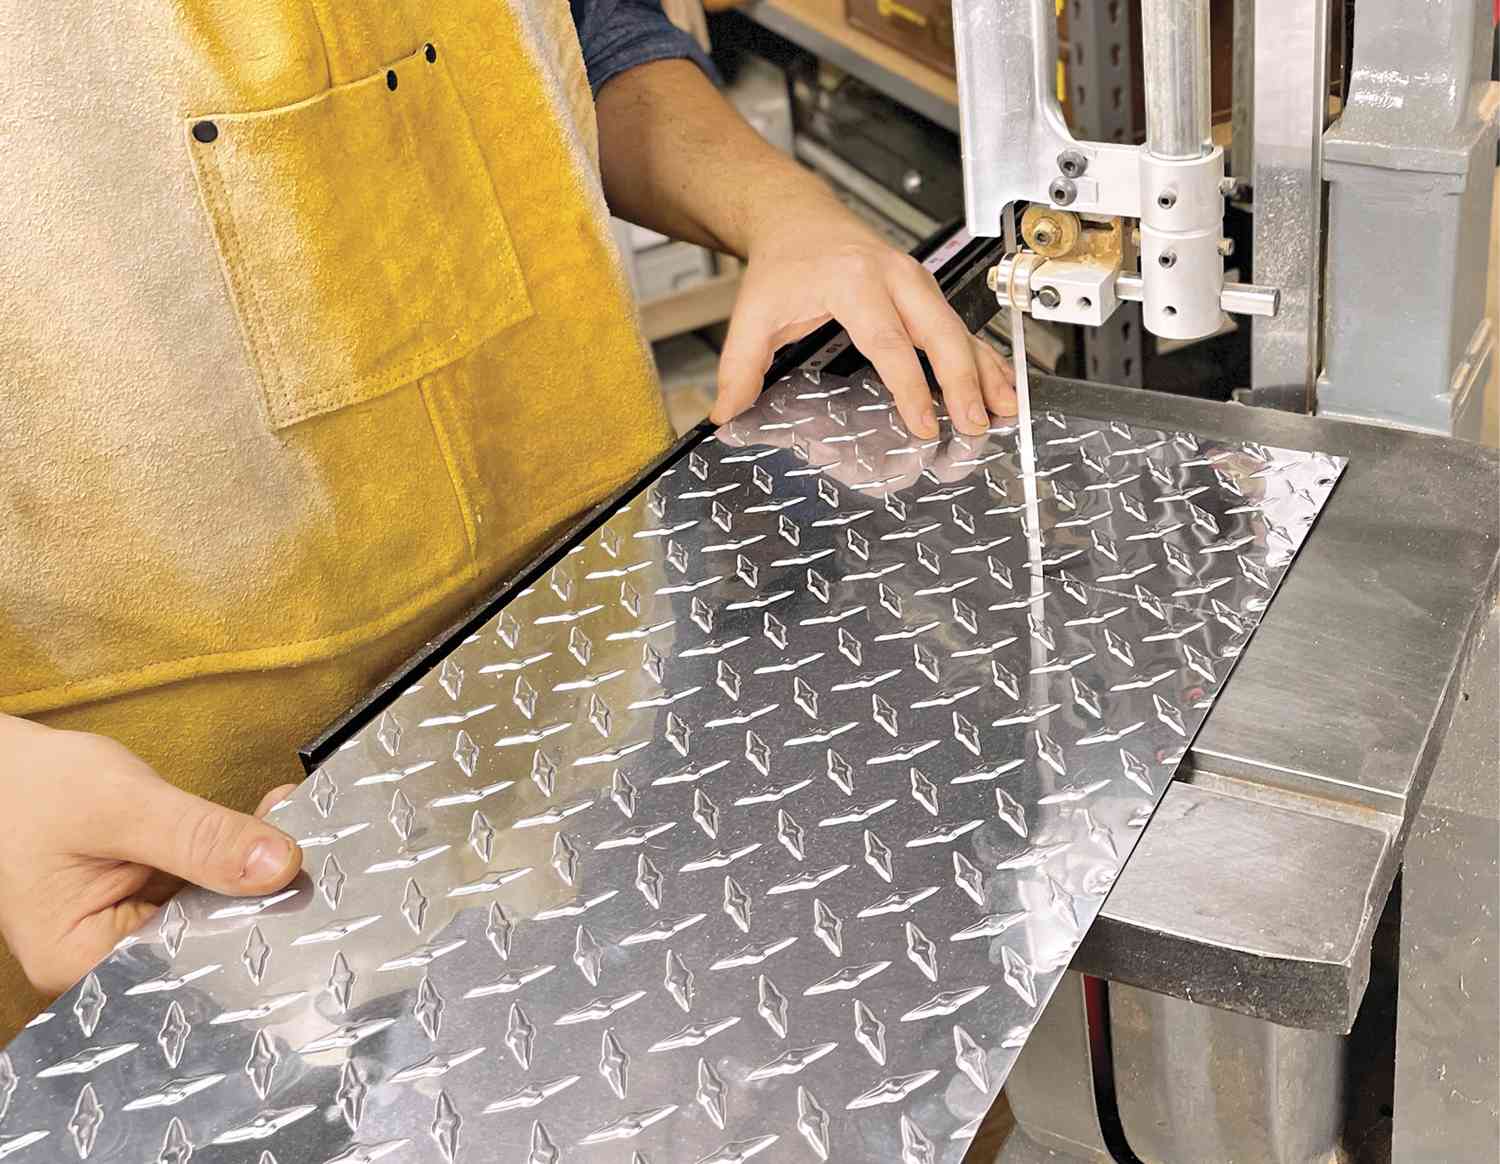 Phot of bandsaw cutting diamond plate metal